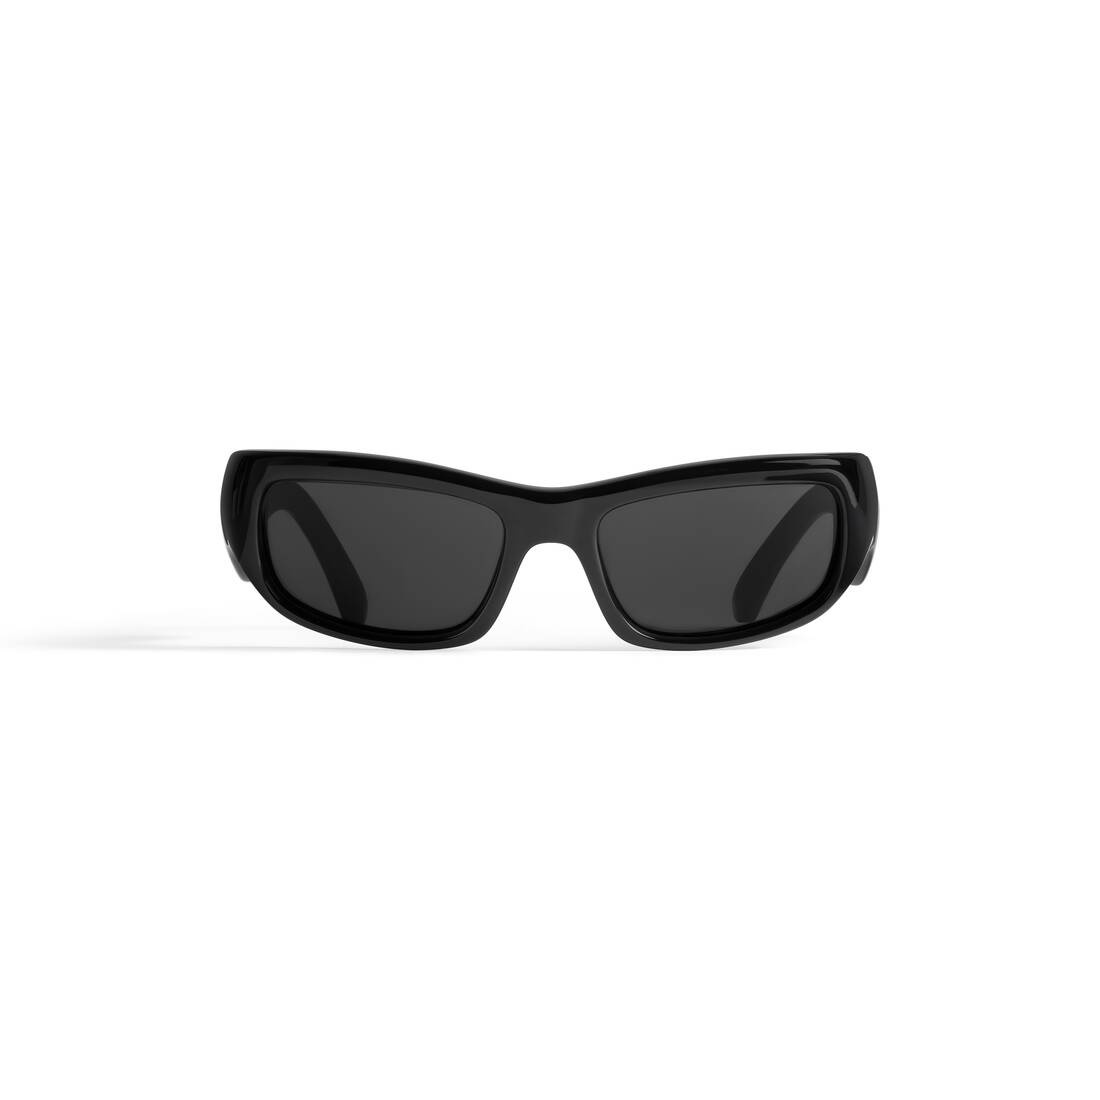 Hamptons Rectangle Sunglasses in Black - 1